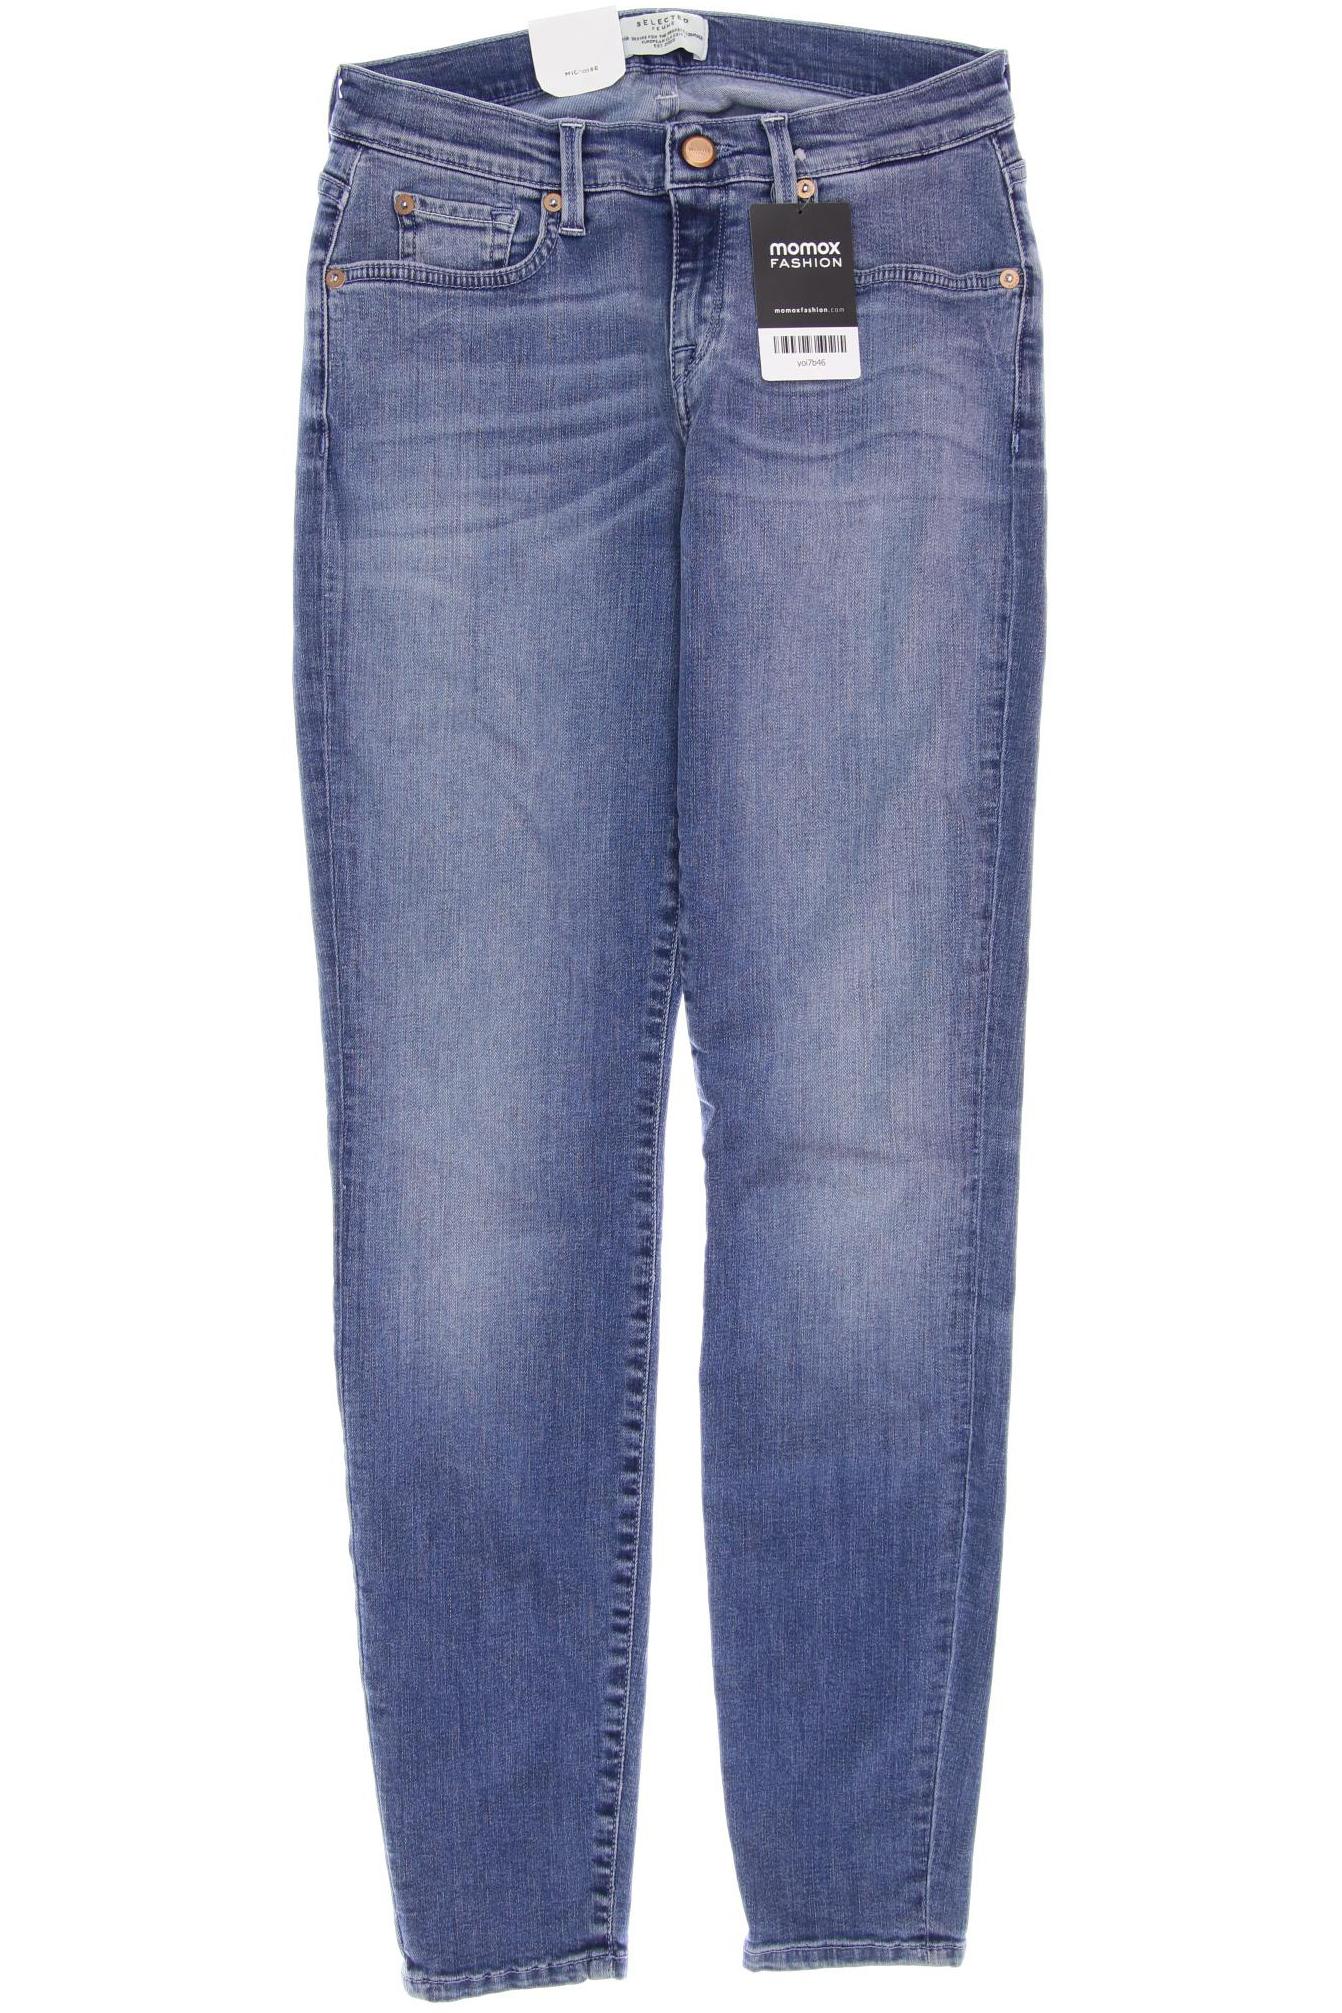 SELECTED Damen Jeans, blau von Selected